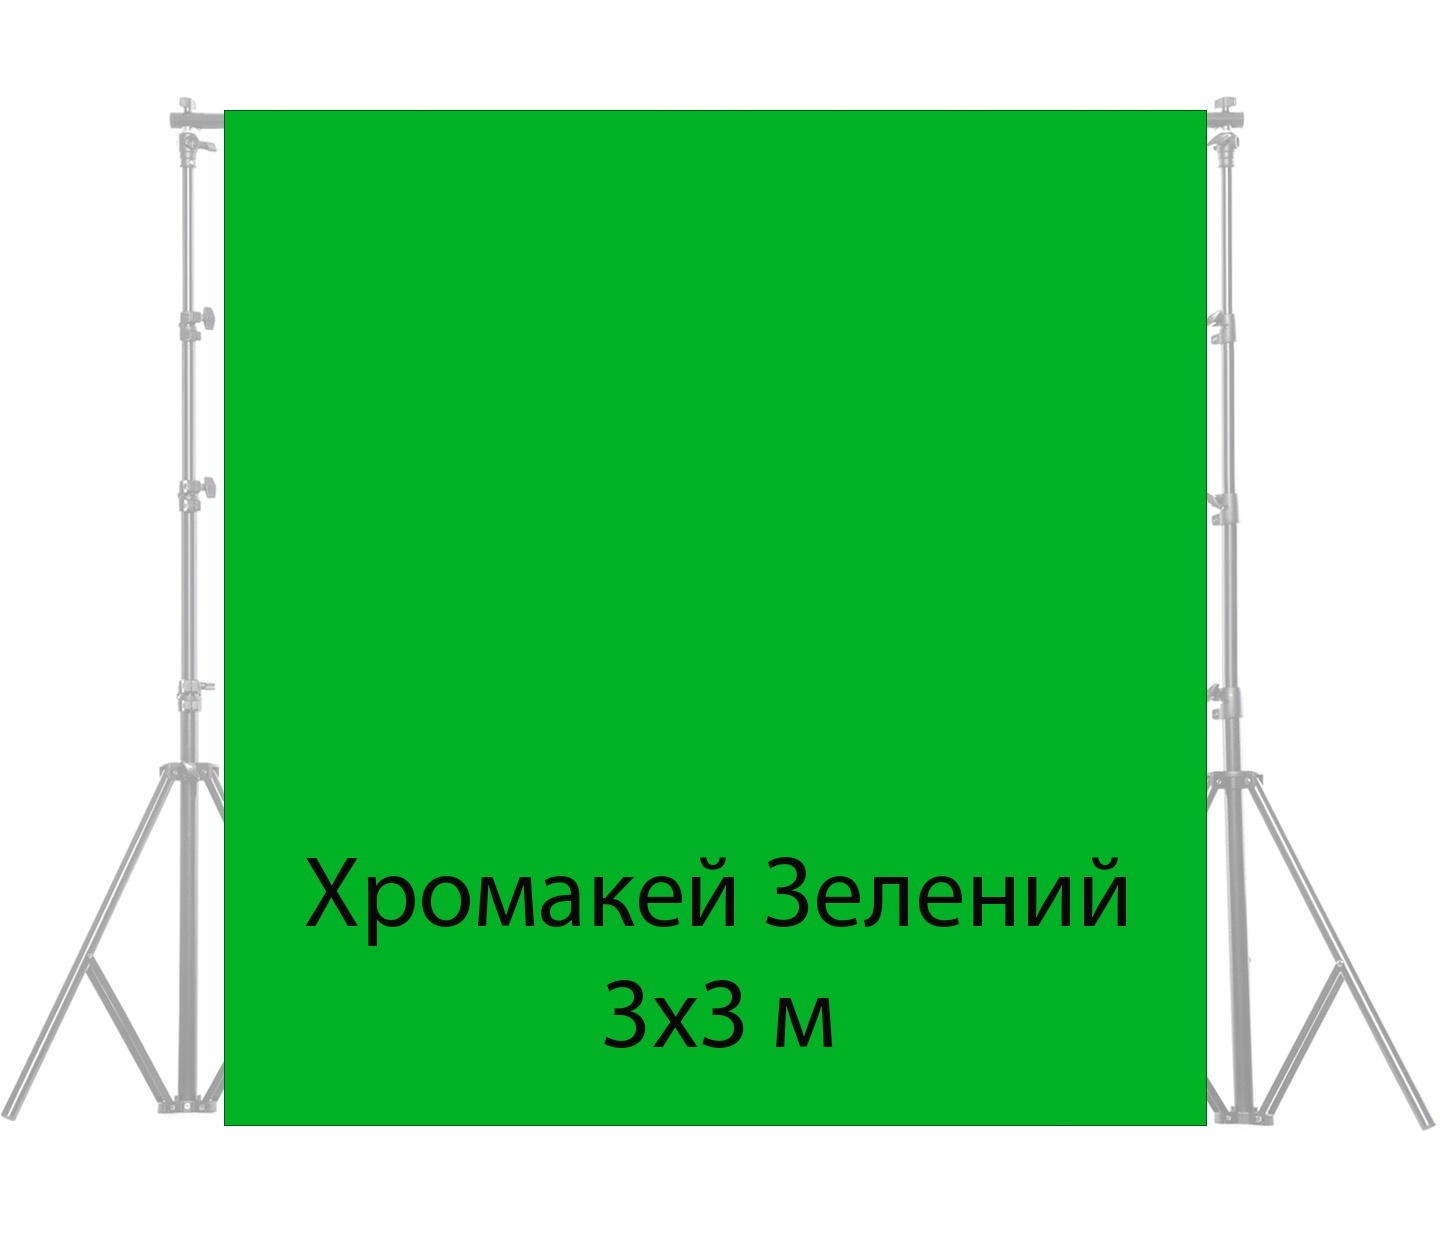 Фон тканевый Mircopro 3x3 метра, зелёного цвета (Chromakey) фото